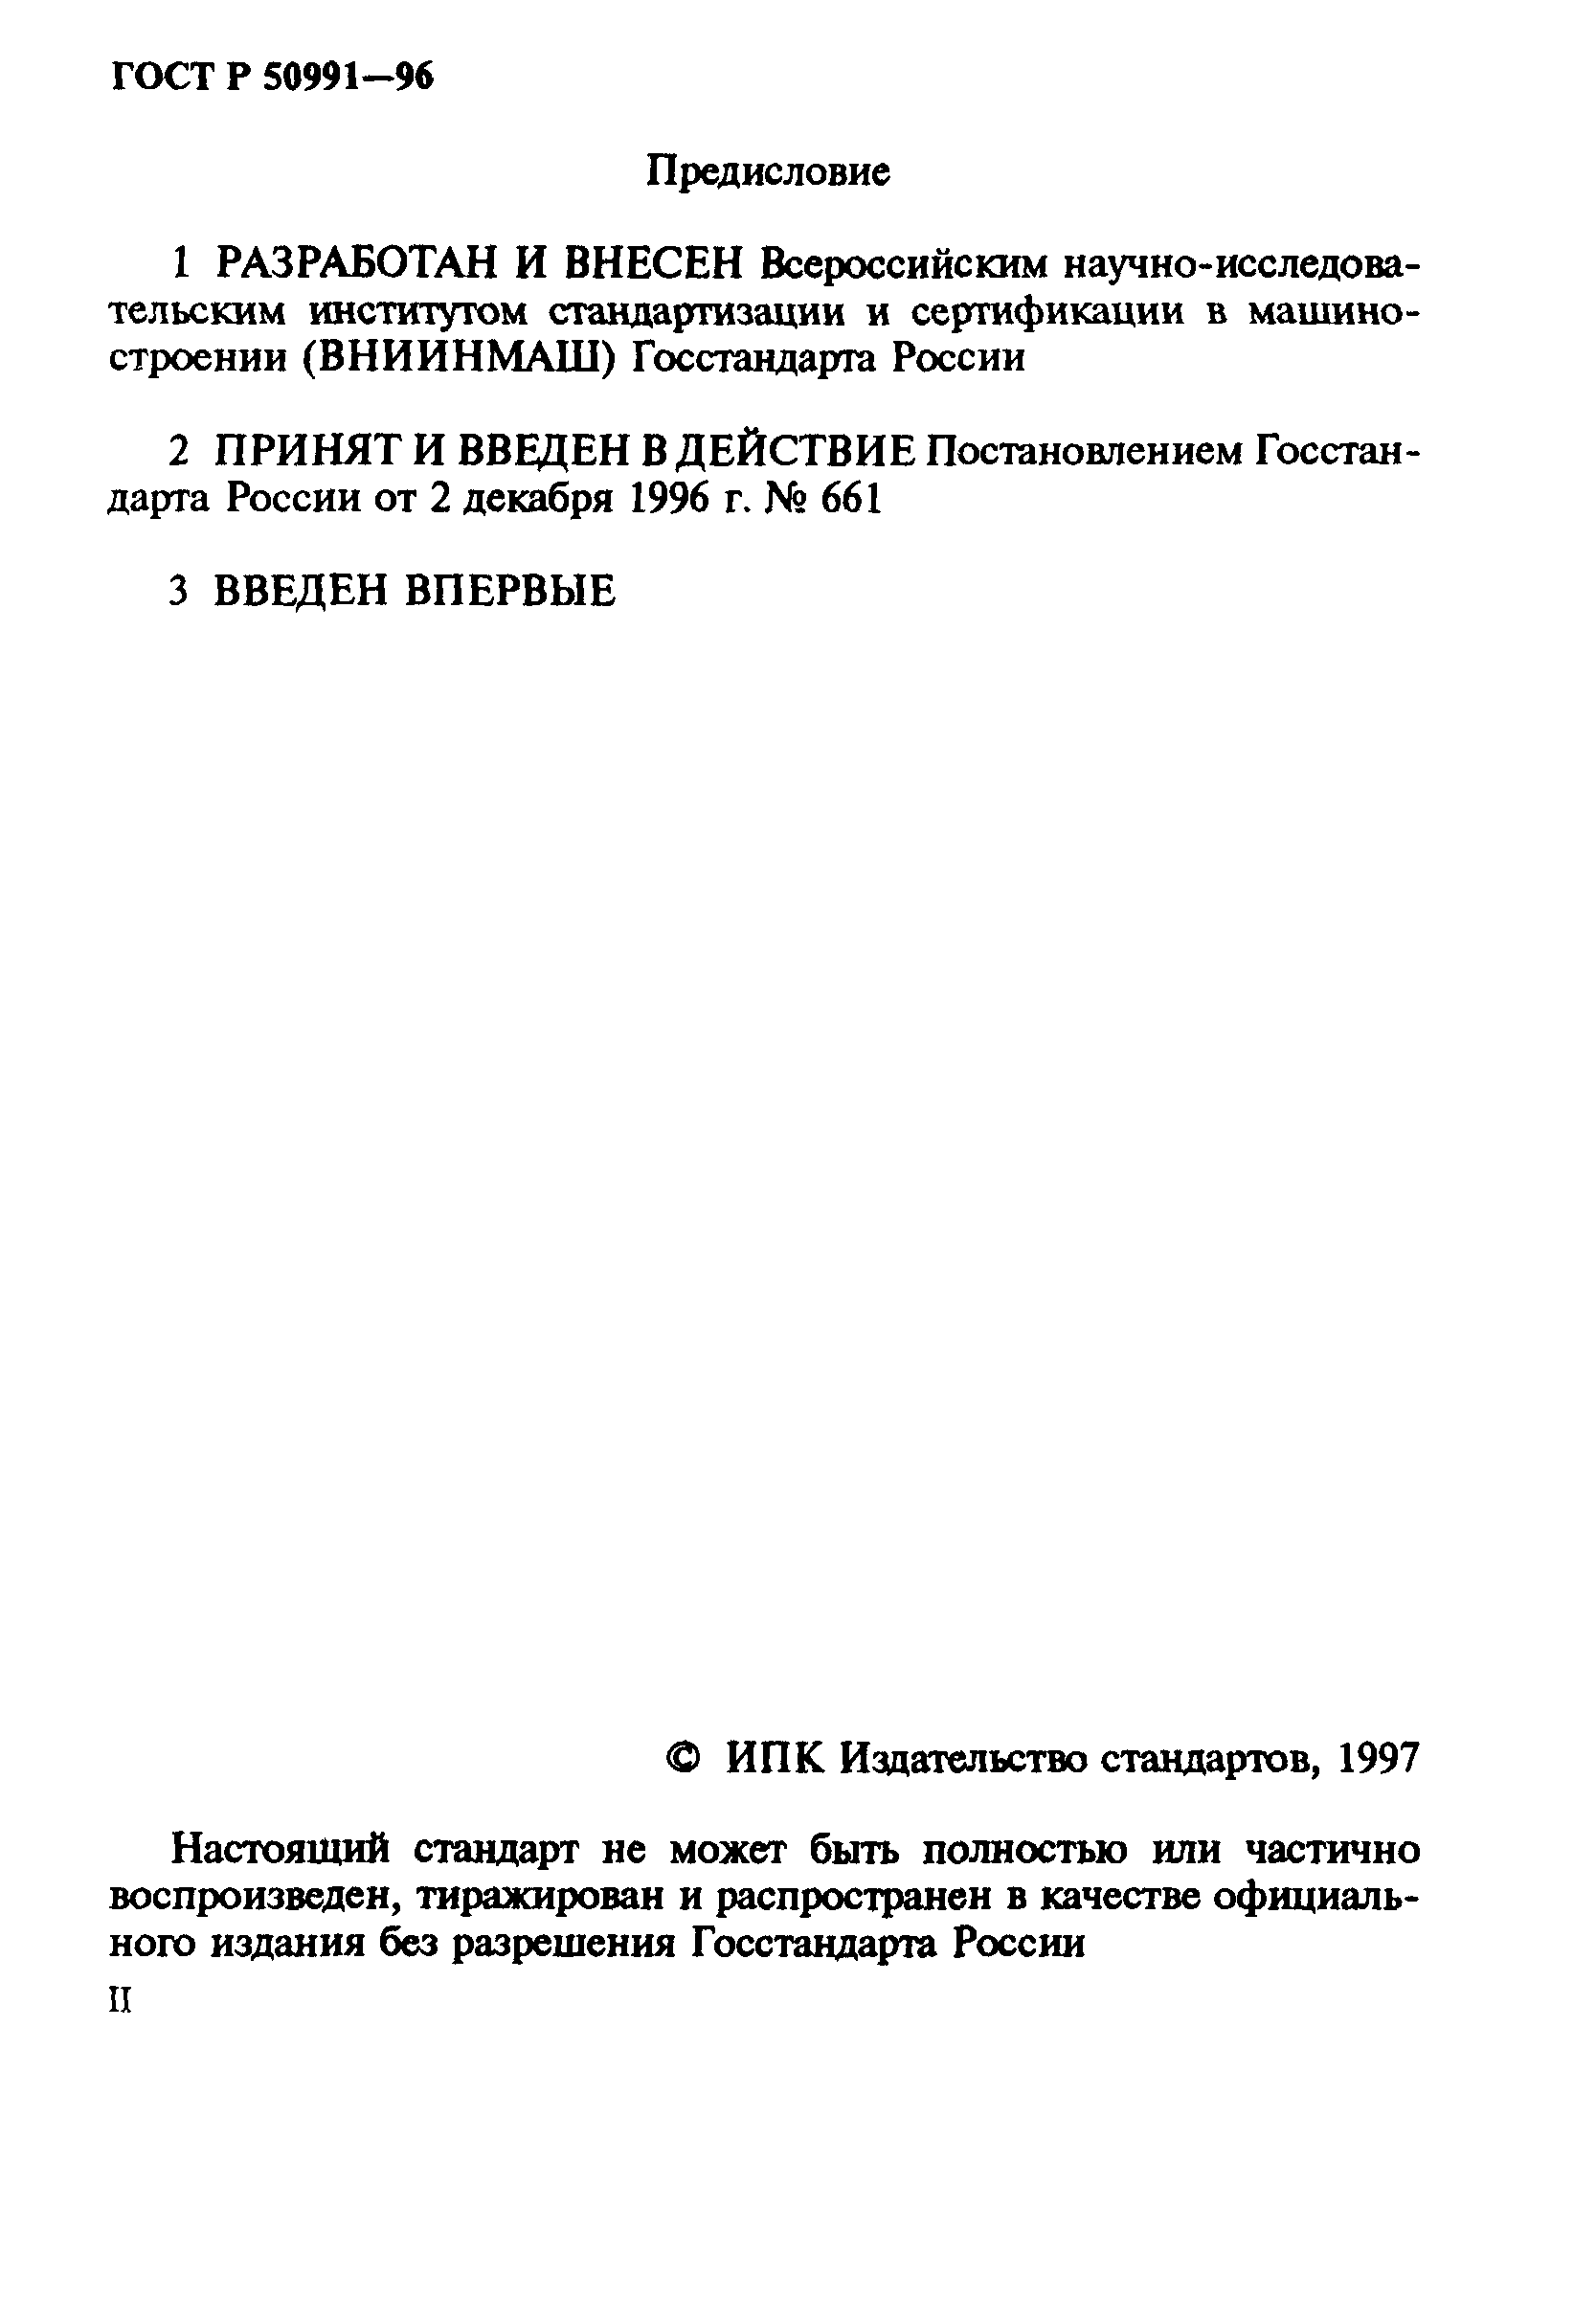 ГОСТ Р 50991-96